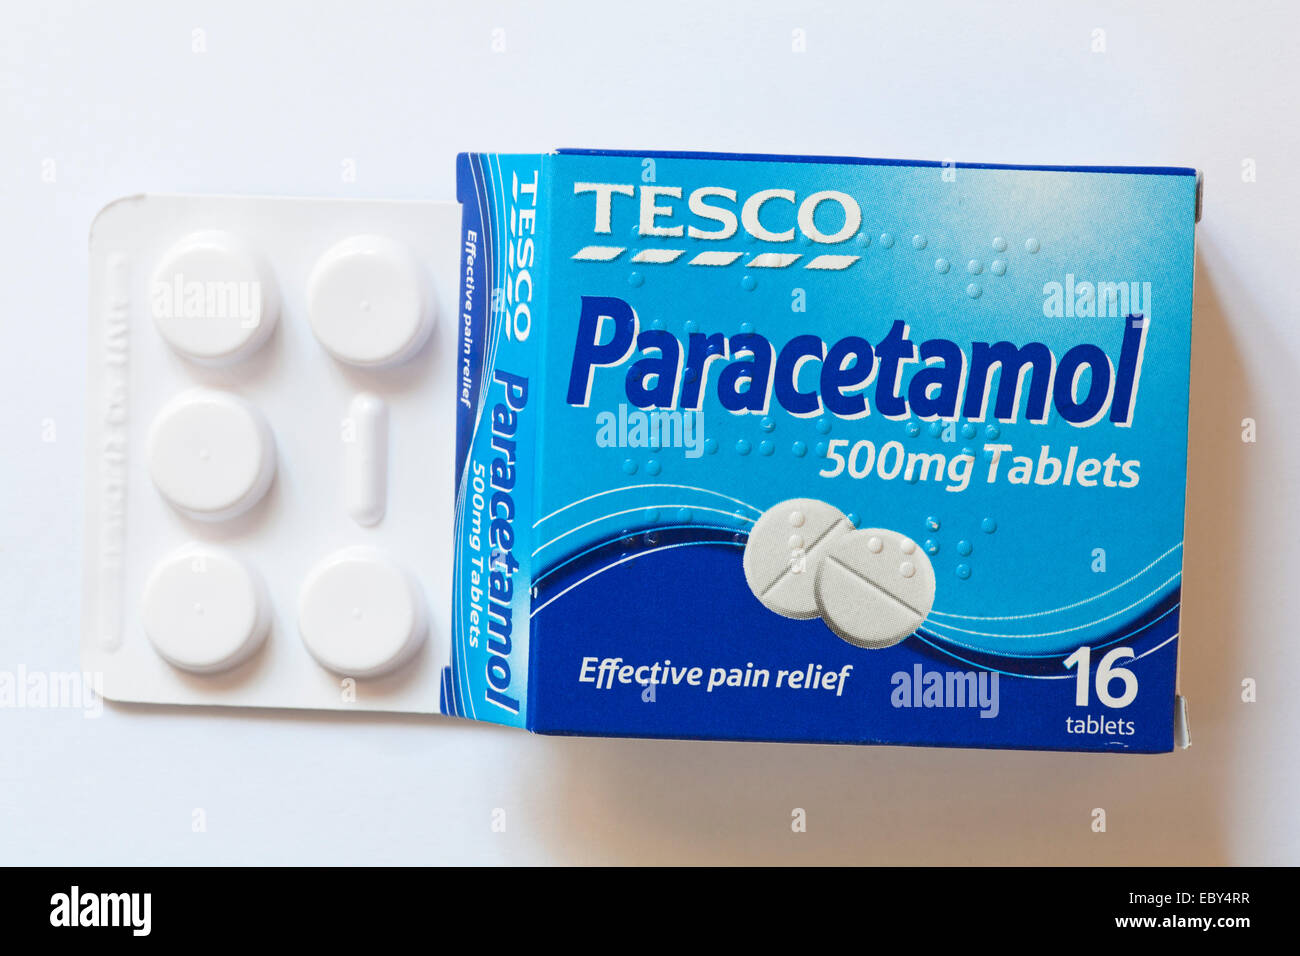 paracetamol tablets 500mg